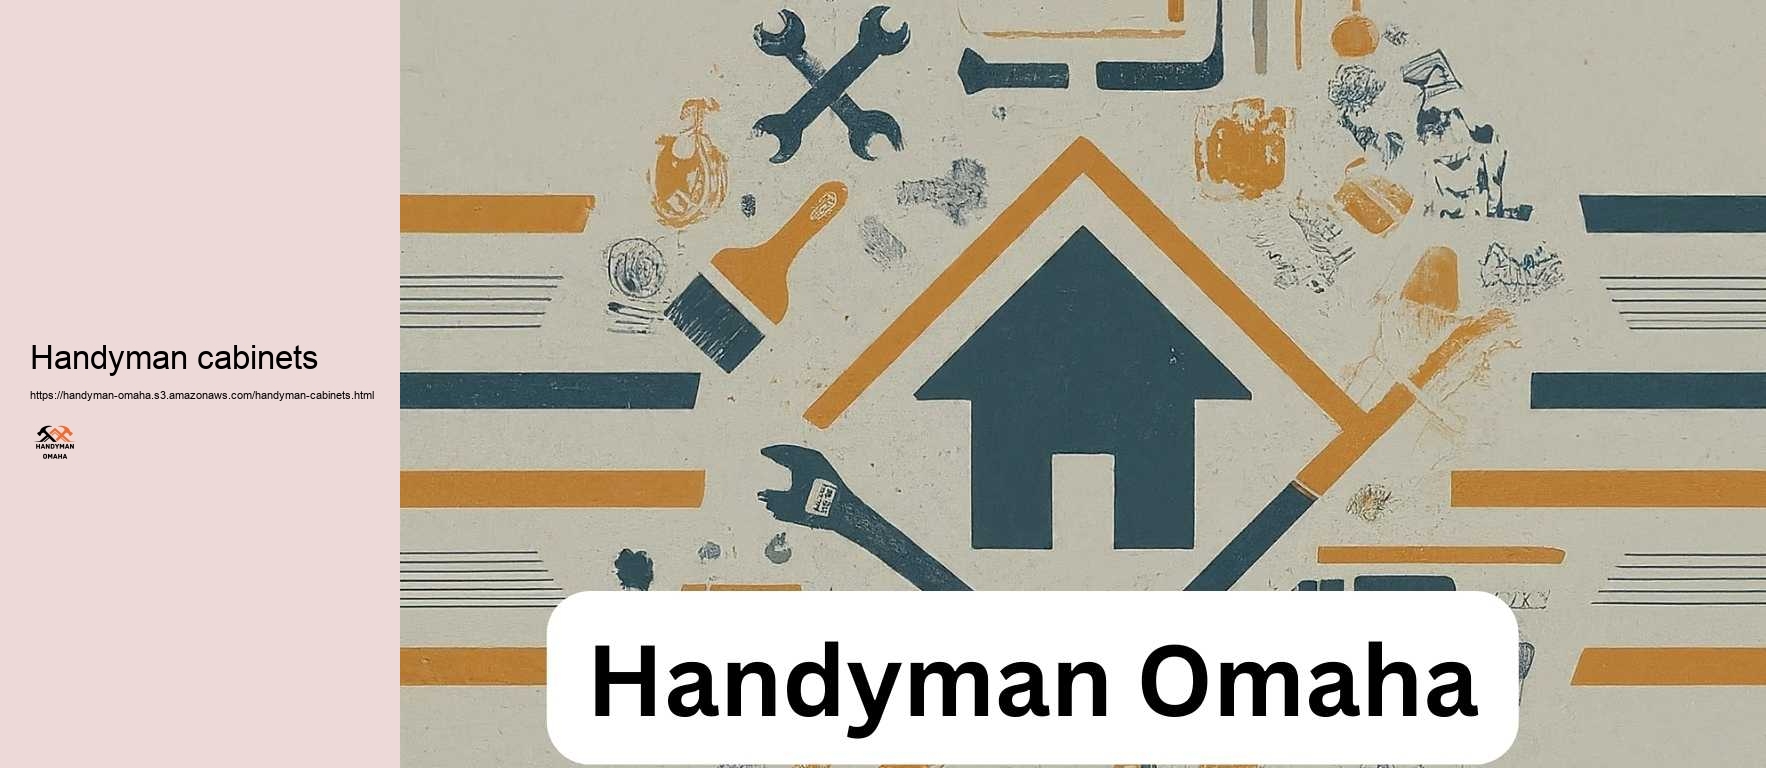 Handyman cabinets